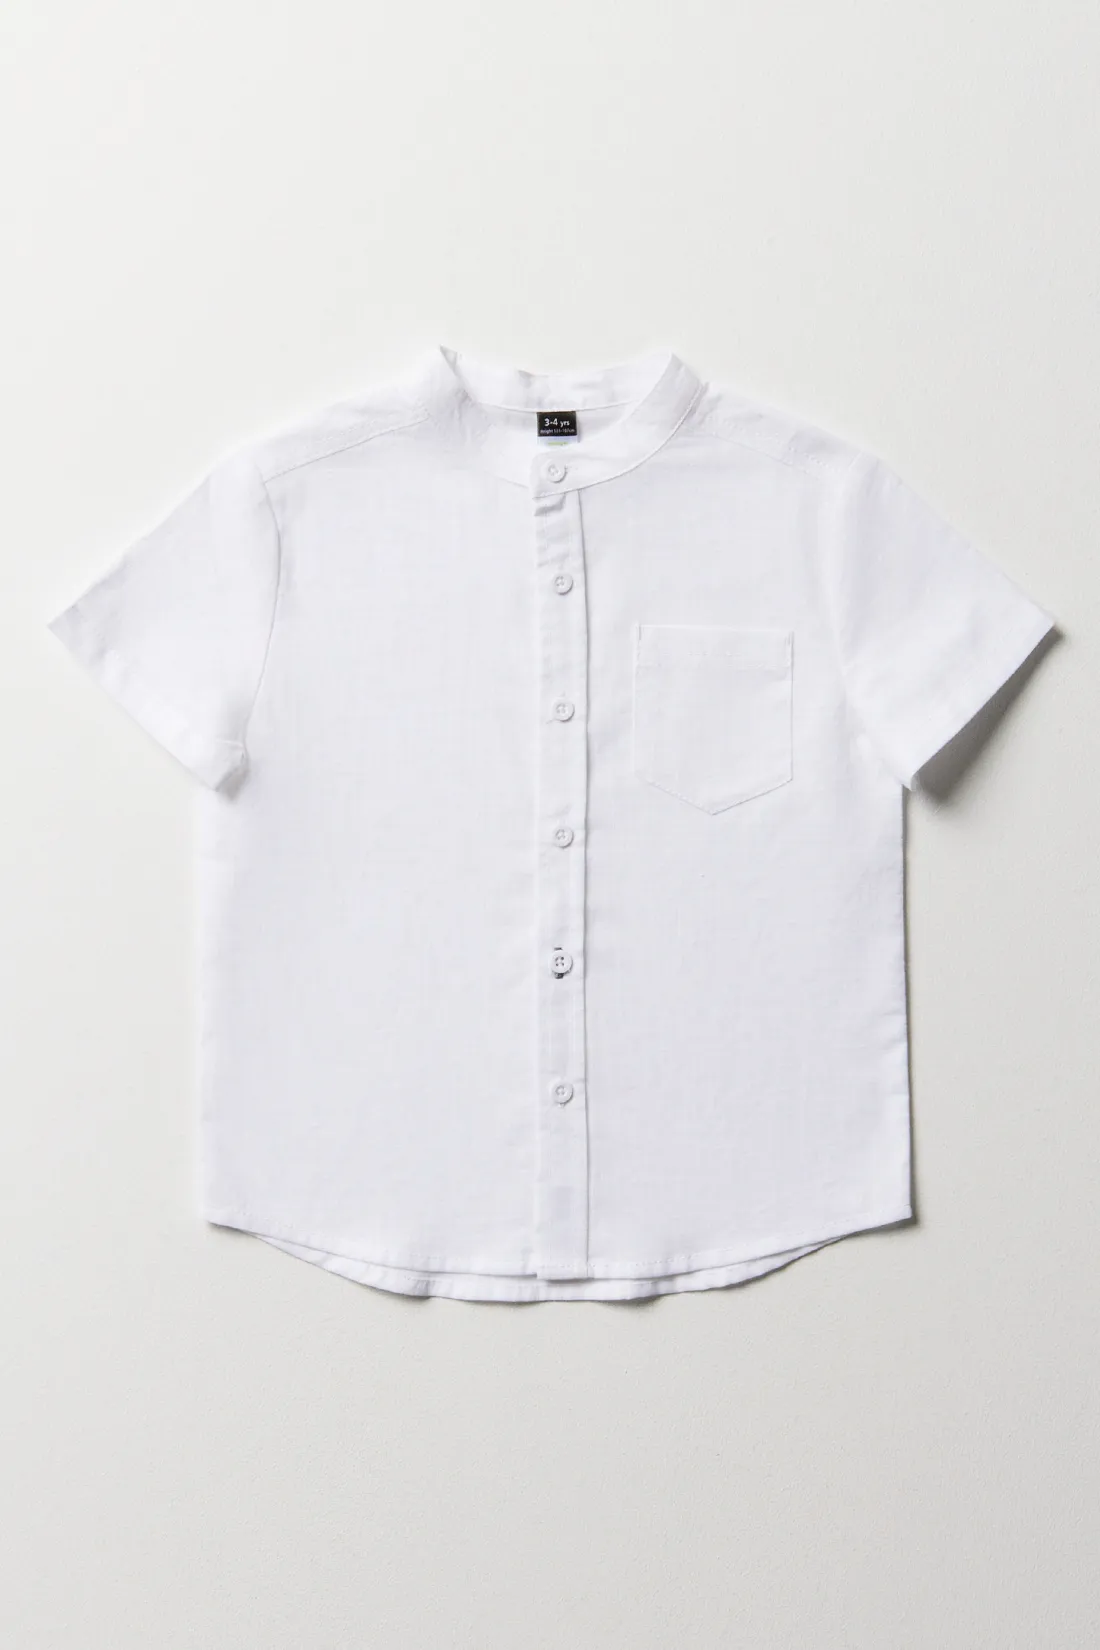 Short sleeve shirt white - BOYS 2-8 YEARS Tops & T-Shirts | Ackermans